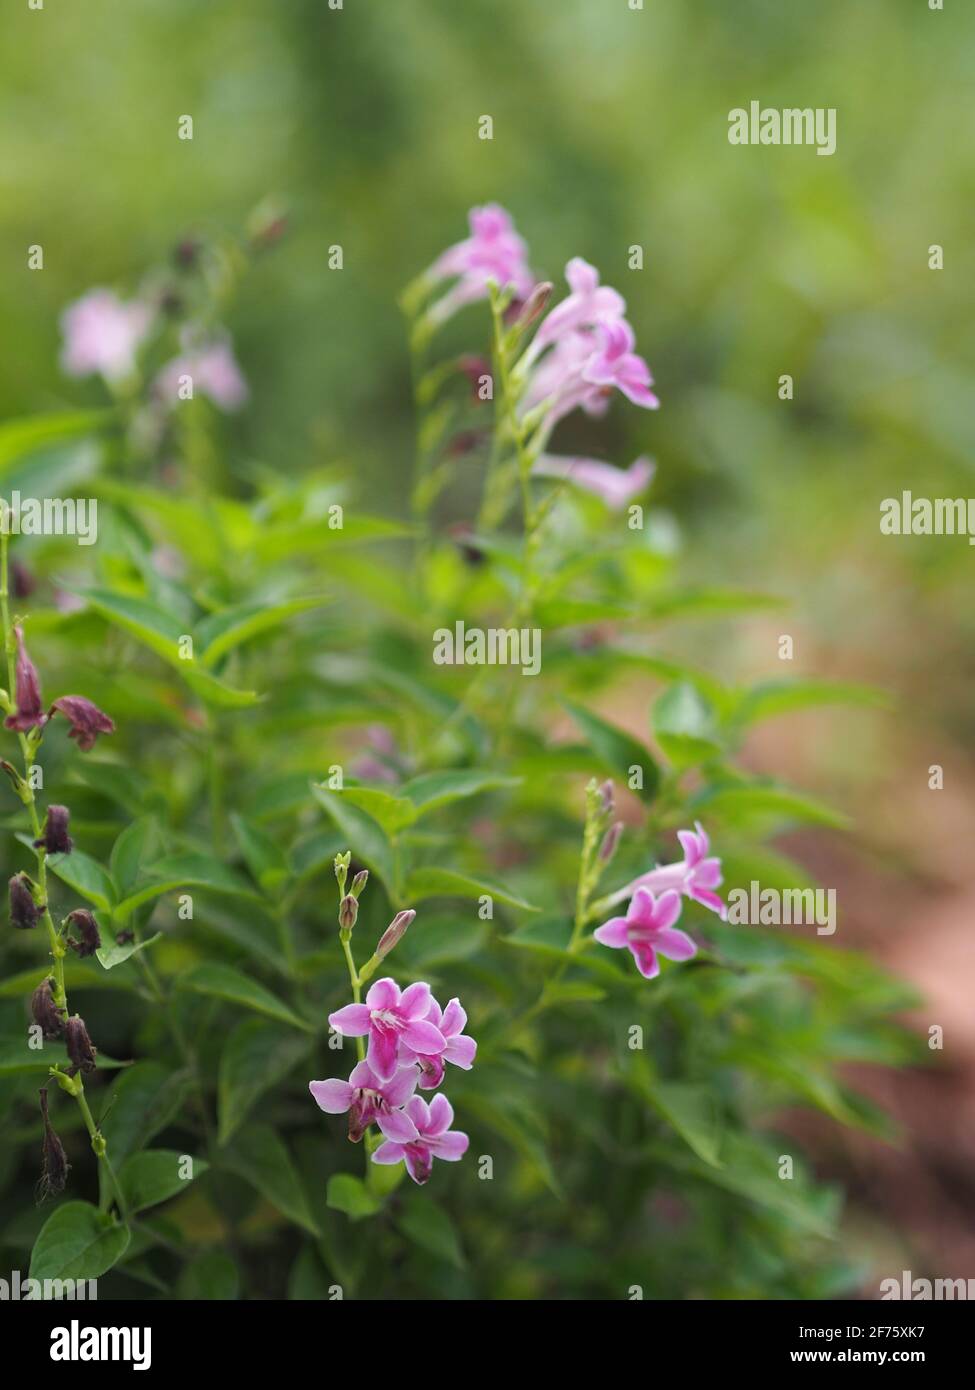 Chinese violet, Coromandel, Ganges primrose, Philippine violet flower Acanthaceae, Asystasia gangetica name tree in garden on nature background Stock Photo